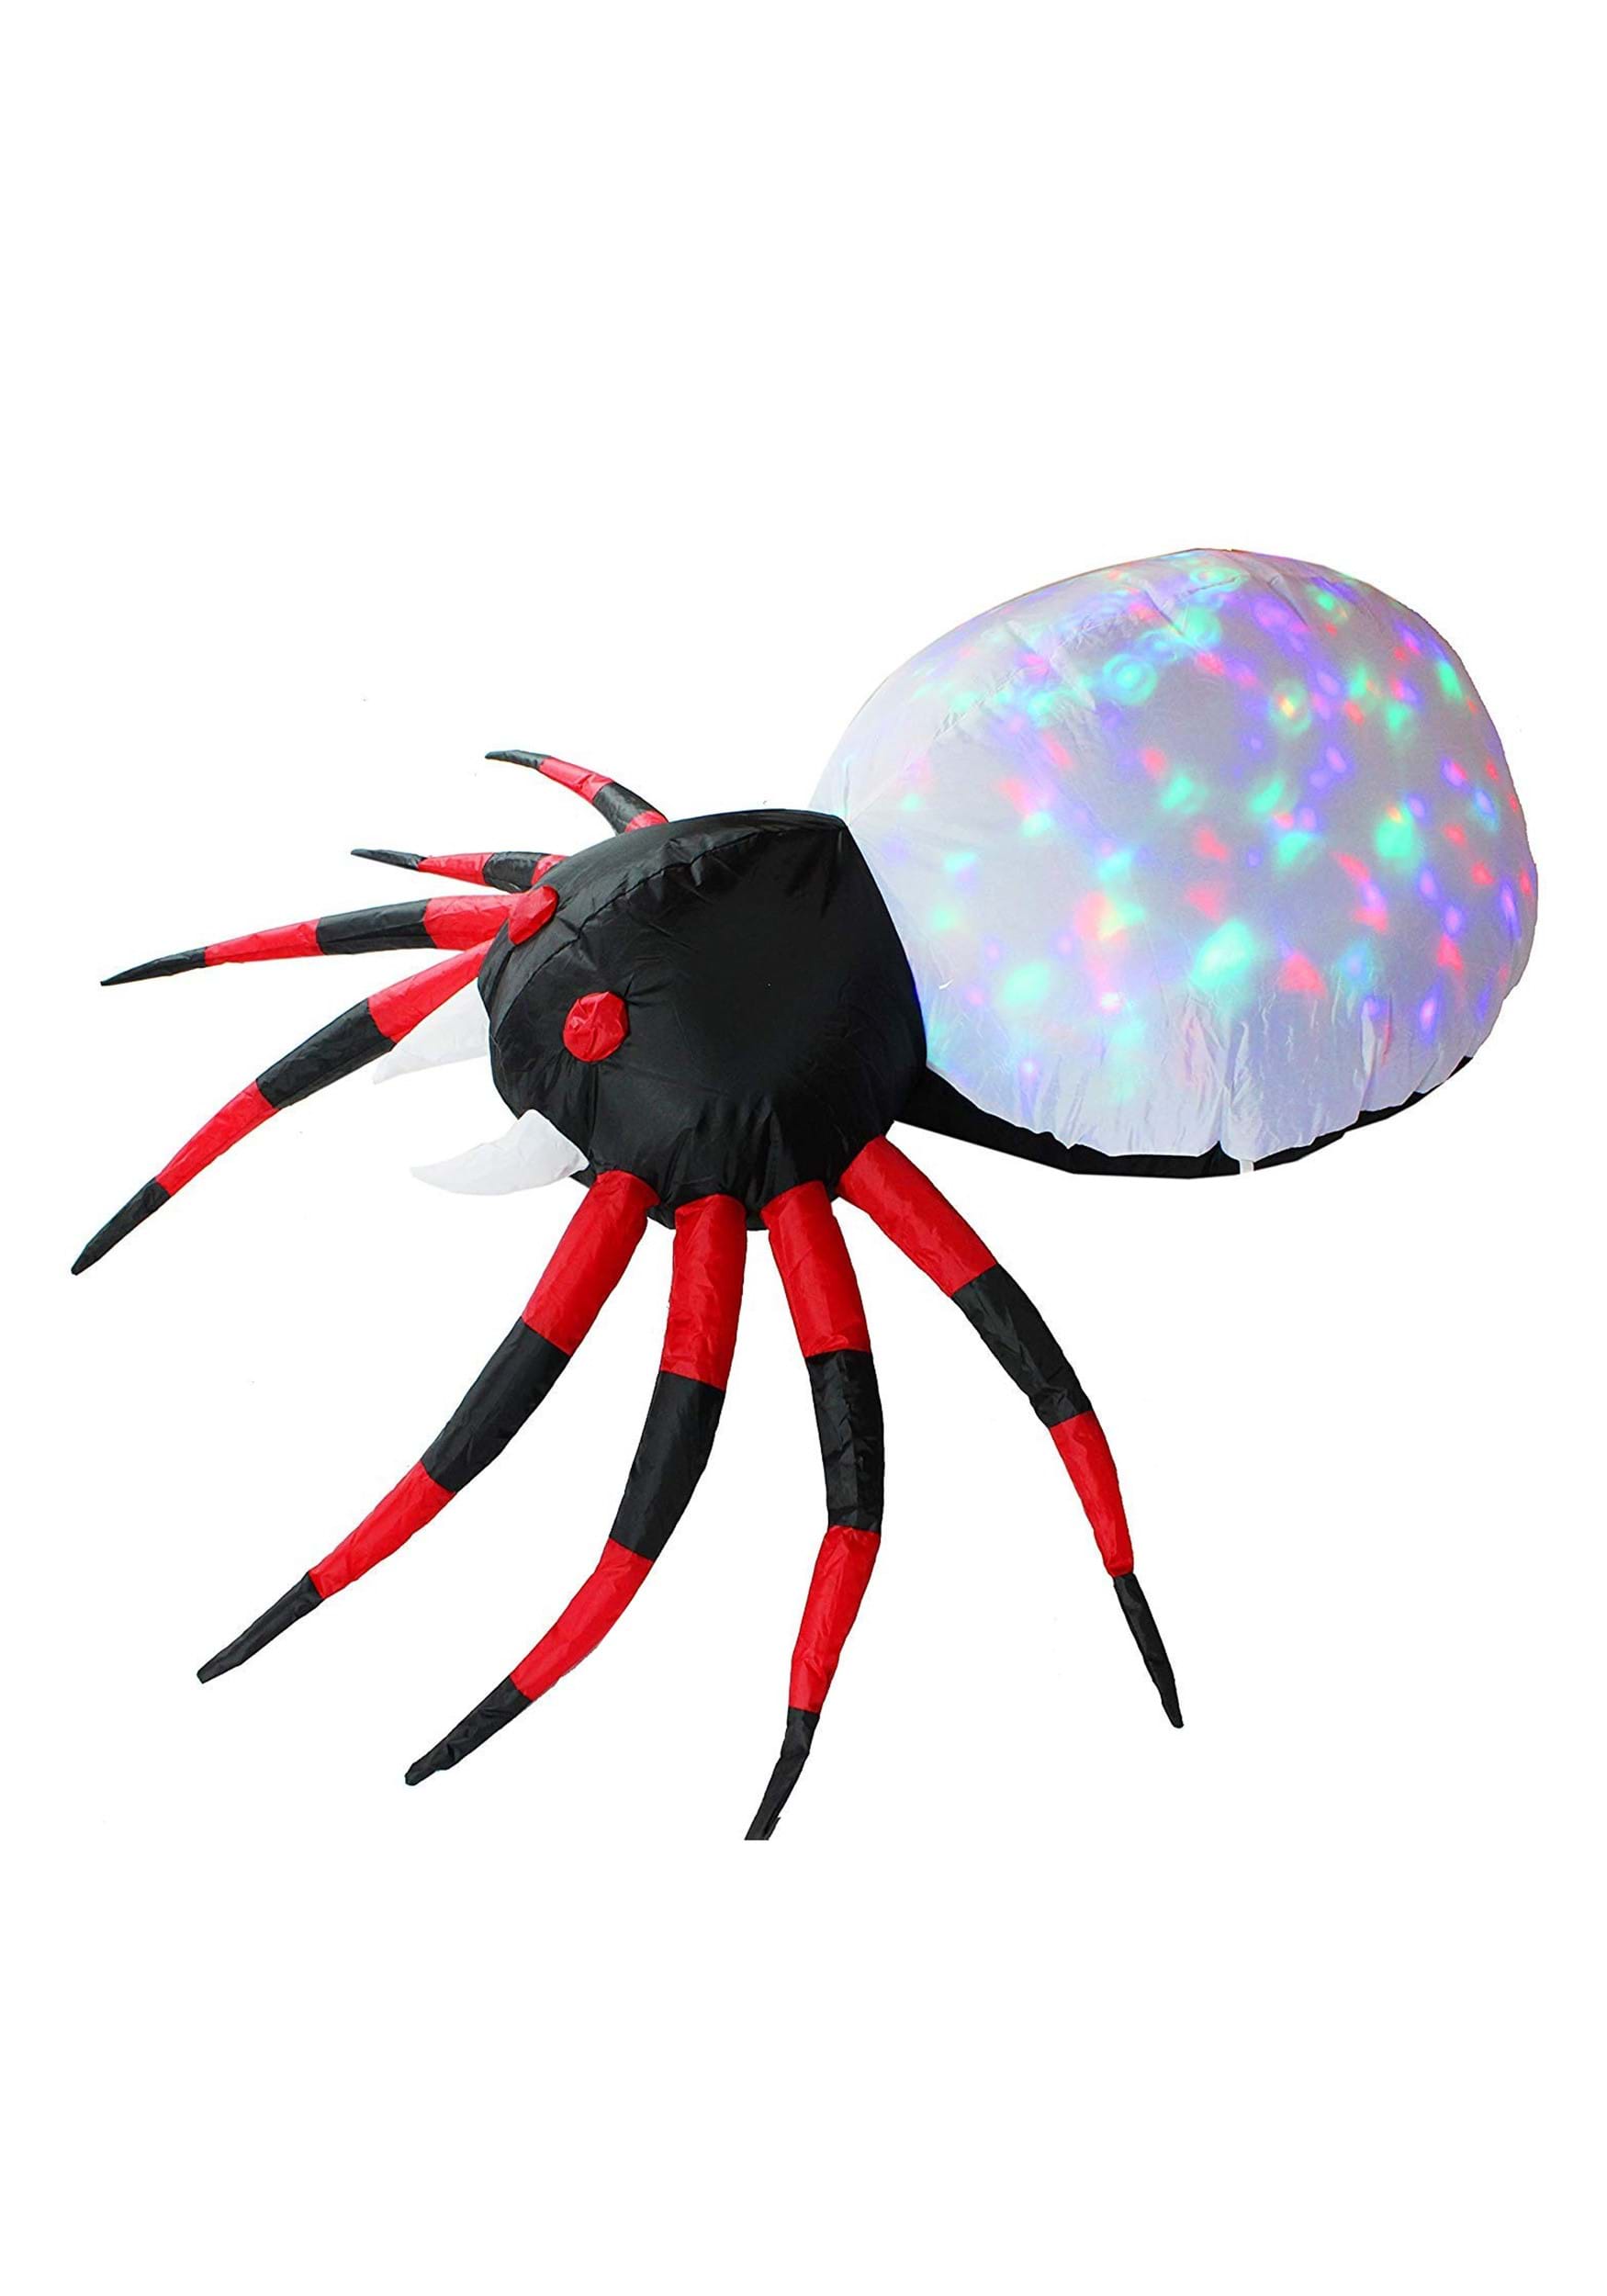 4ft Inflatable Projection Kaleidoscope Spider , Outdoor Halloween Decor